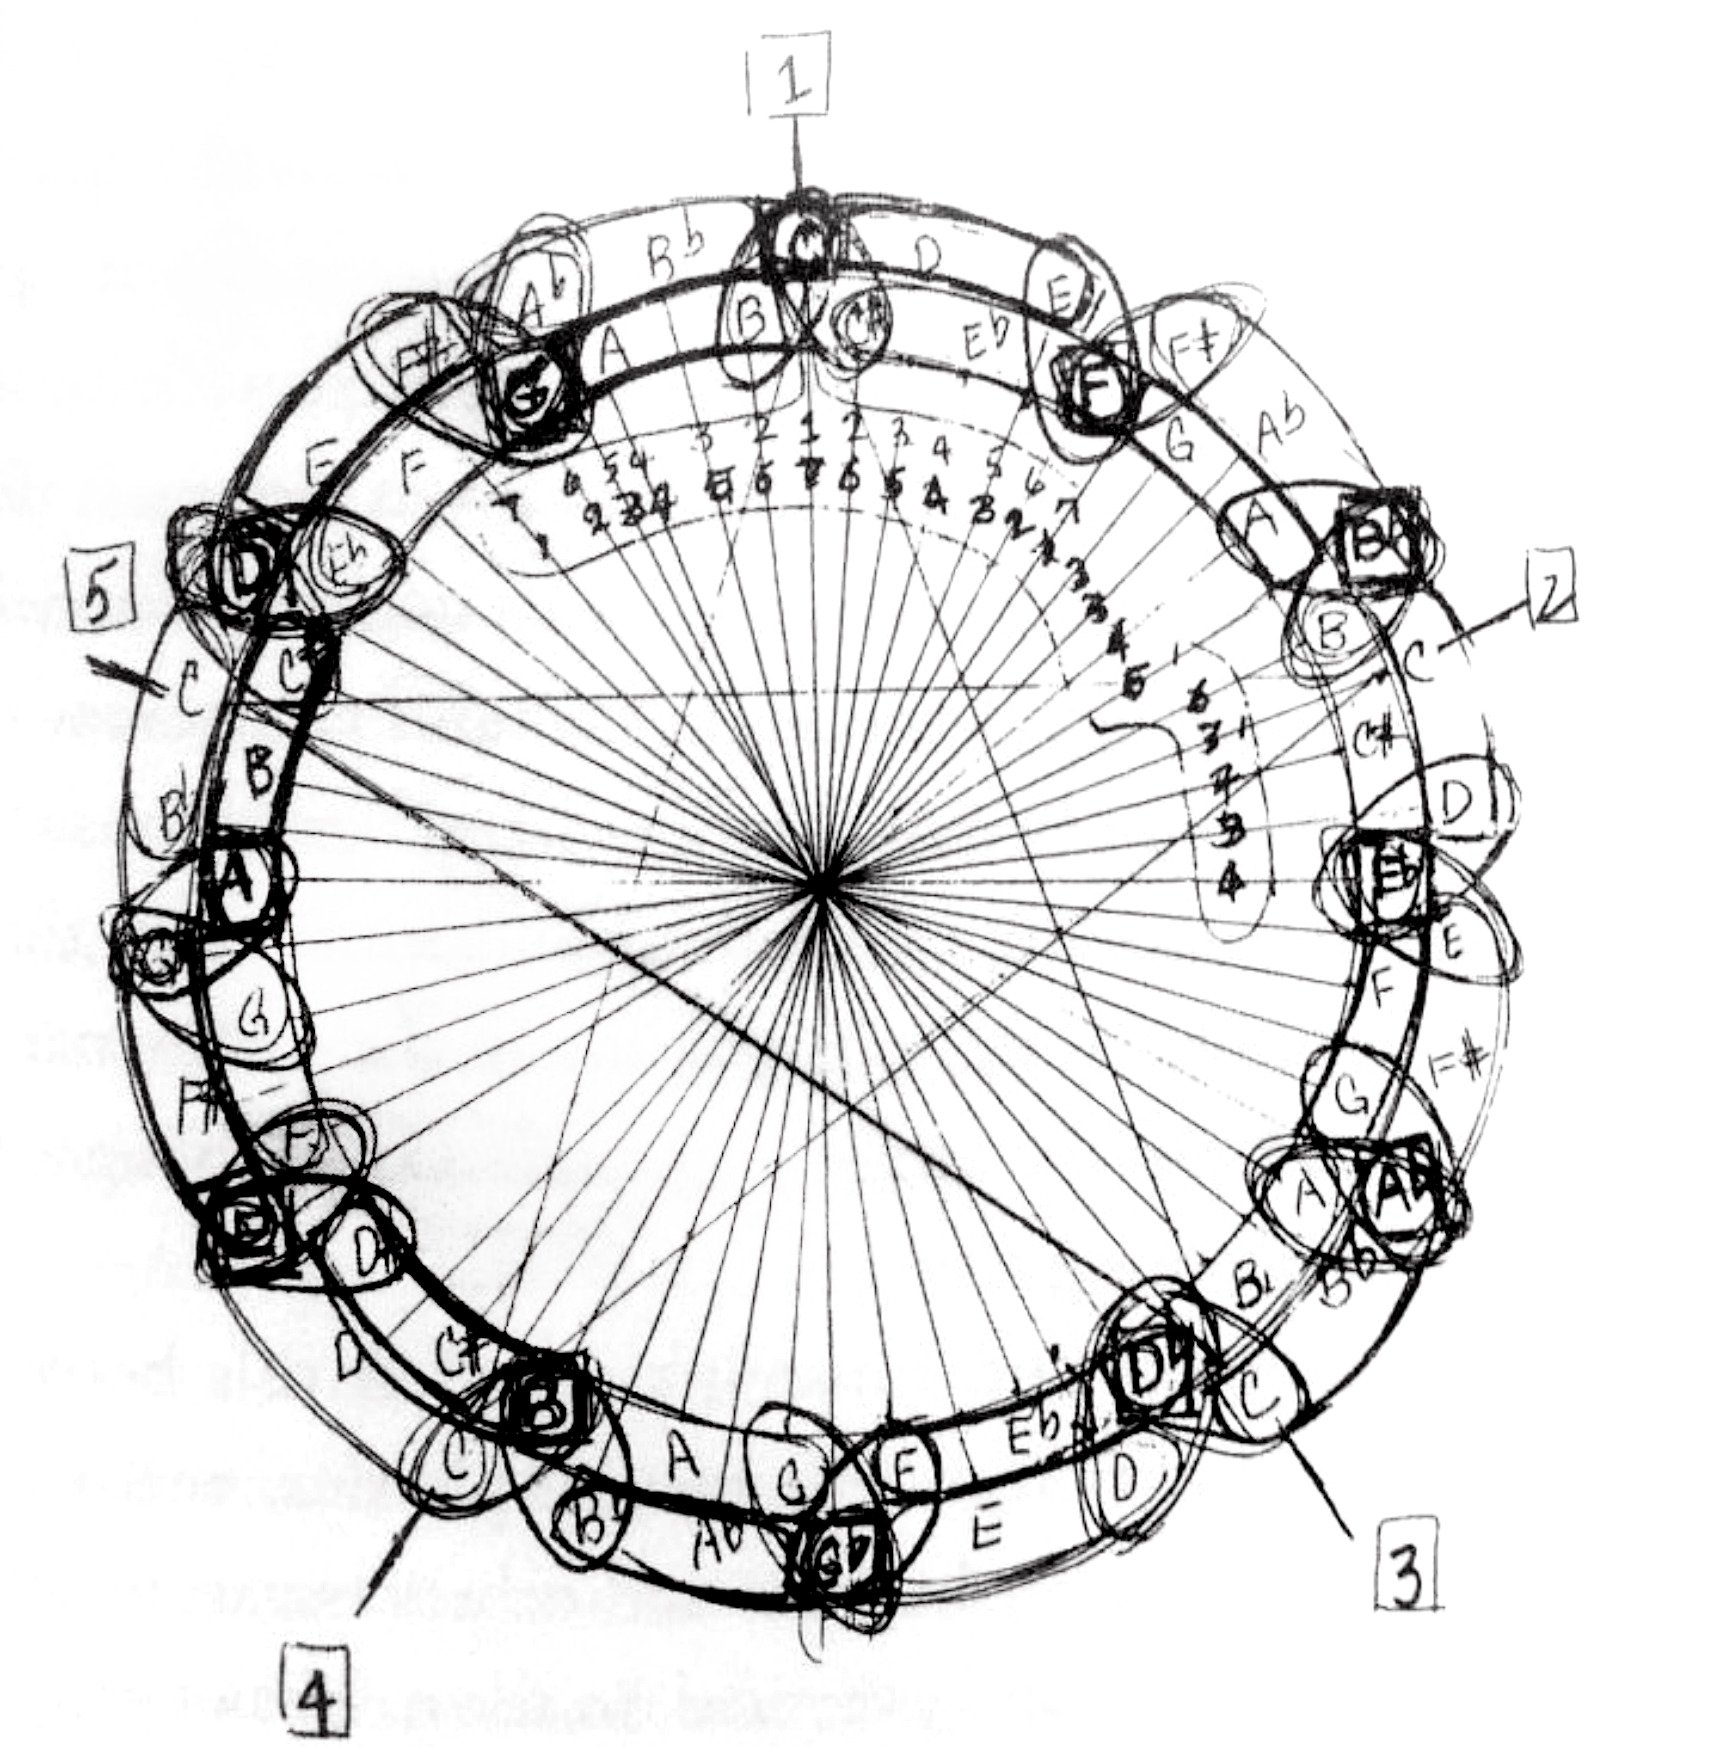 Sketch of the Coltrane Circle